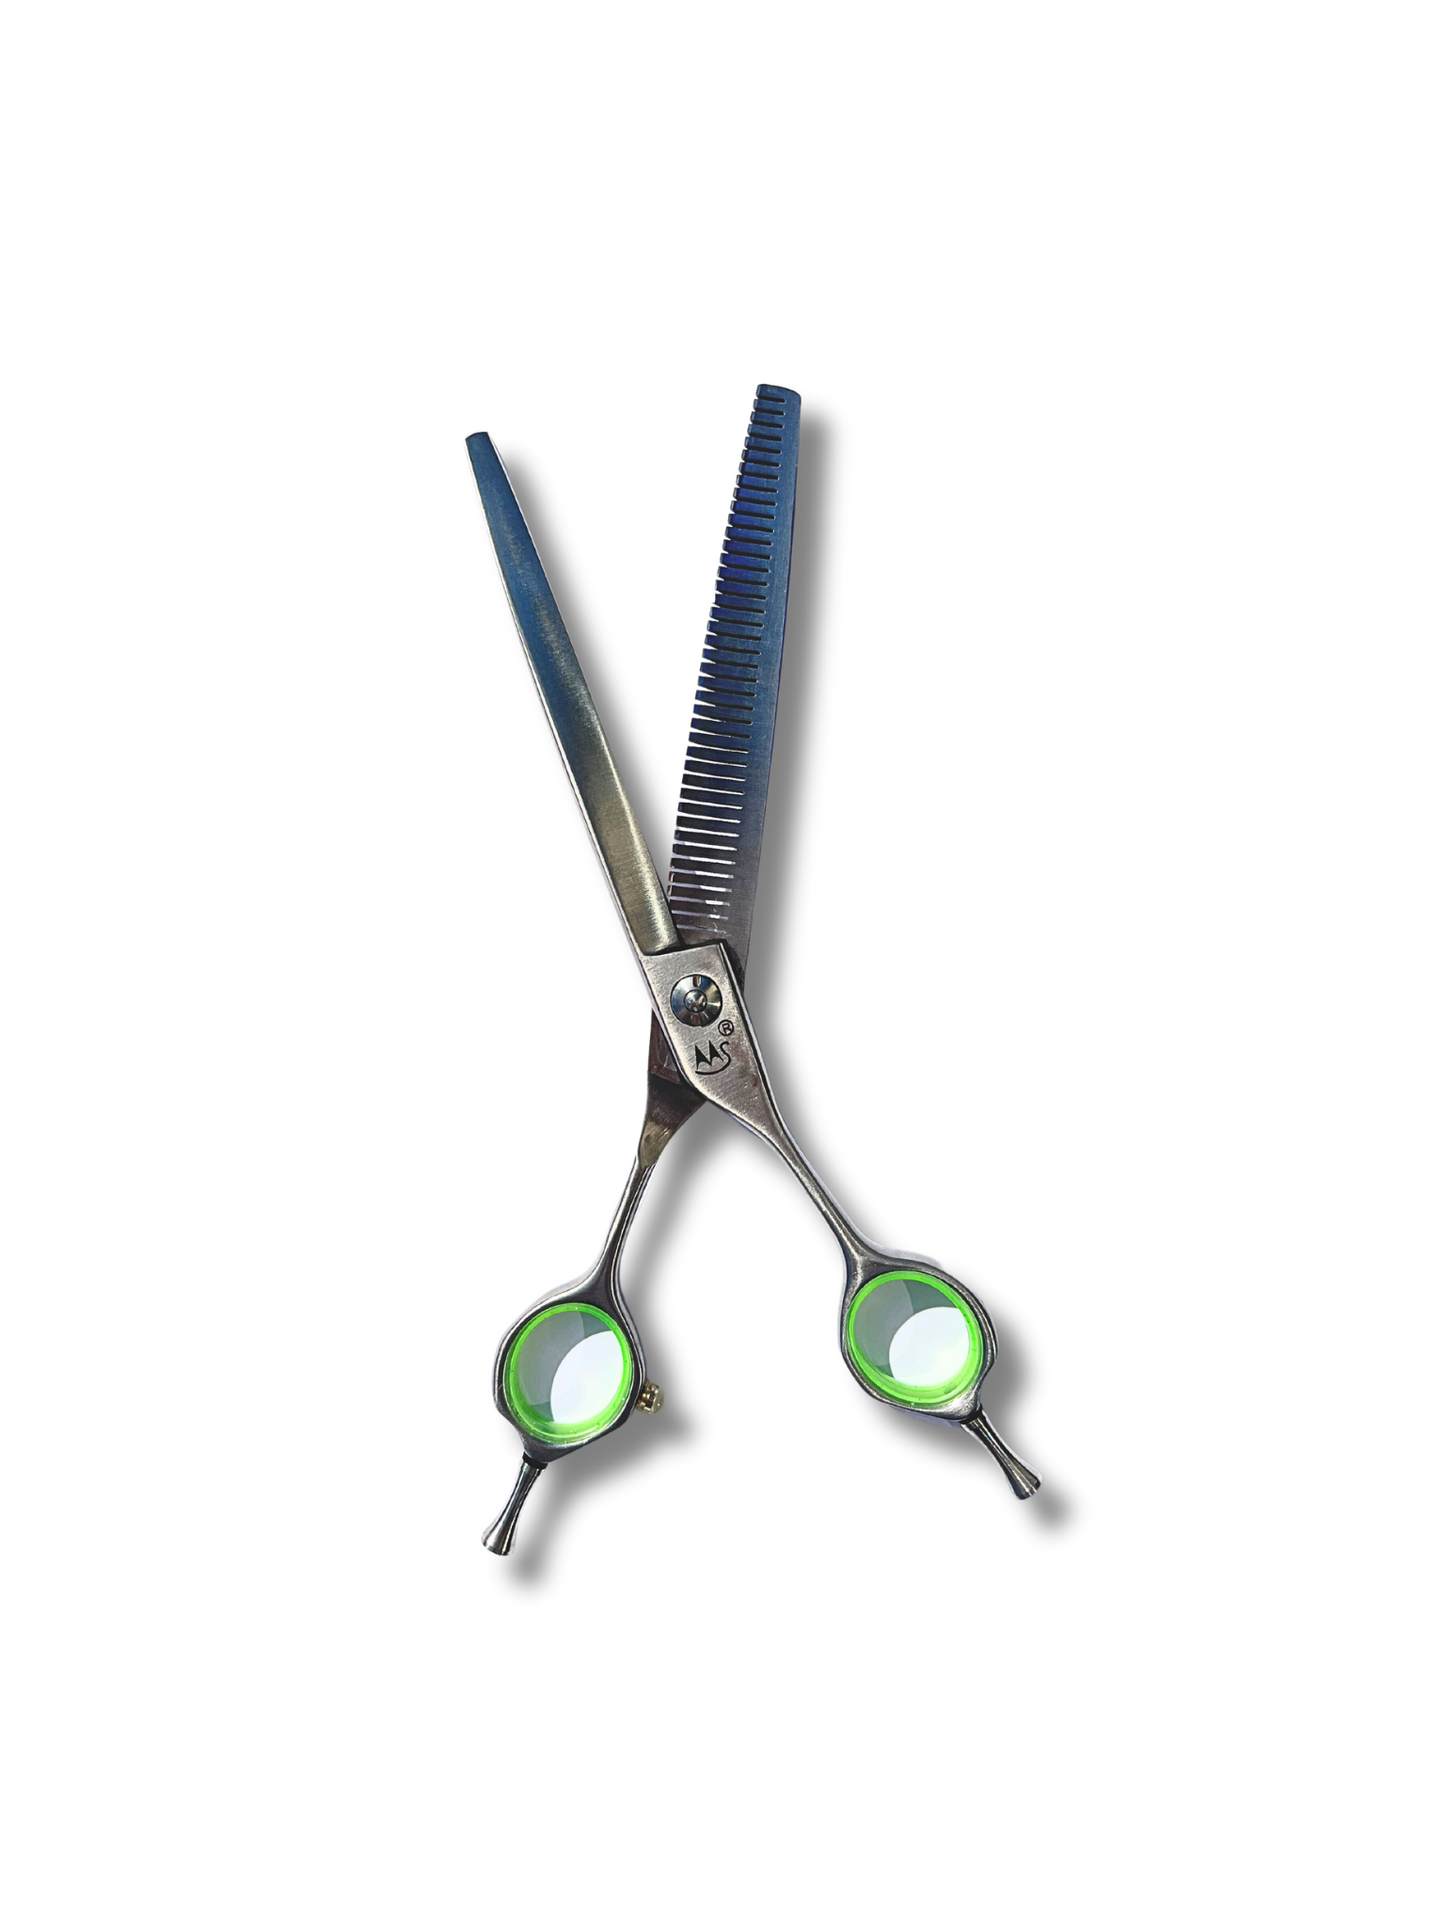 QRB-7040 professional curved shearing scissor 7.0" 40 teeth